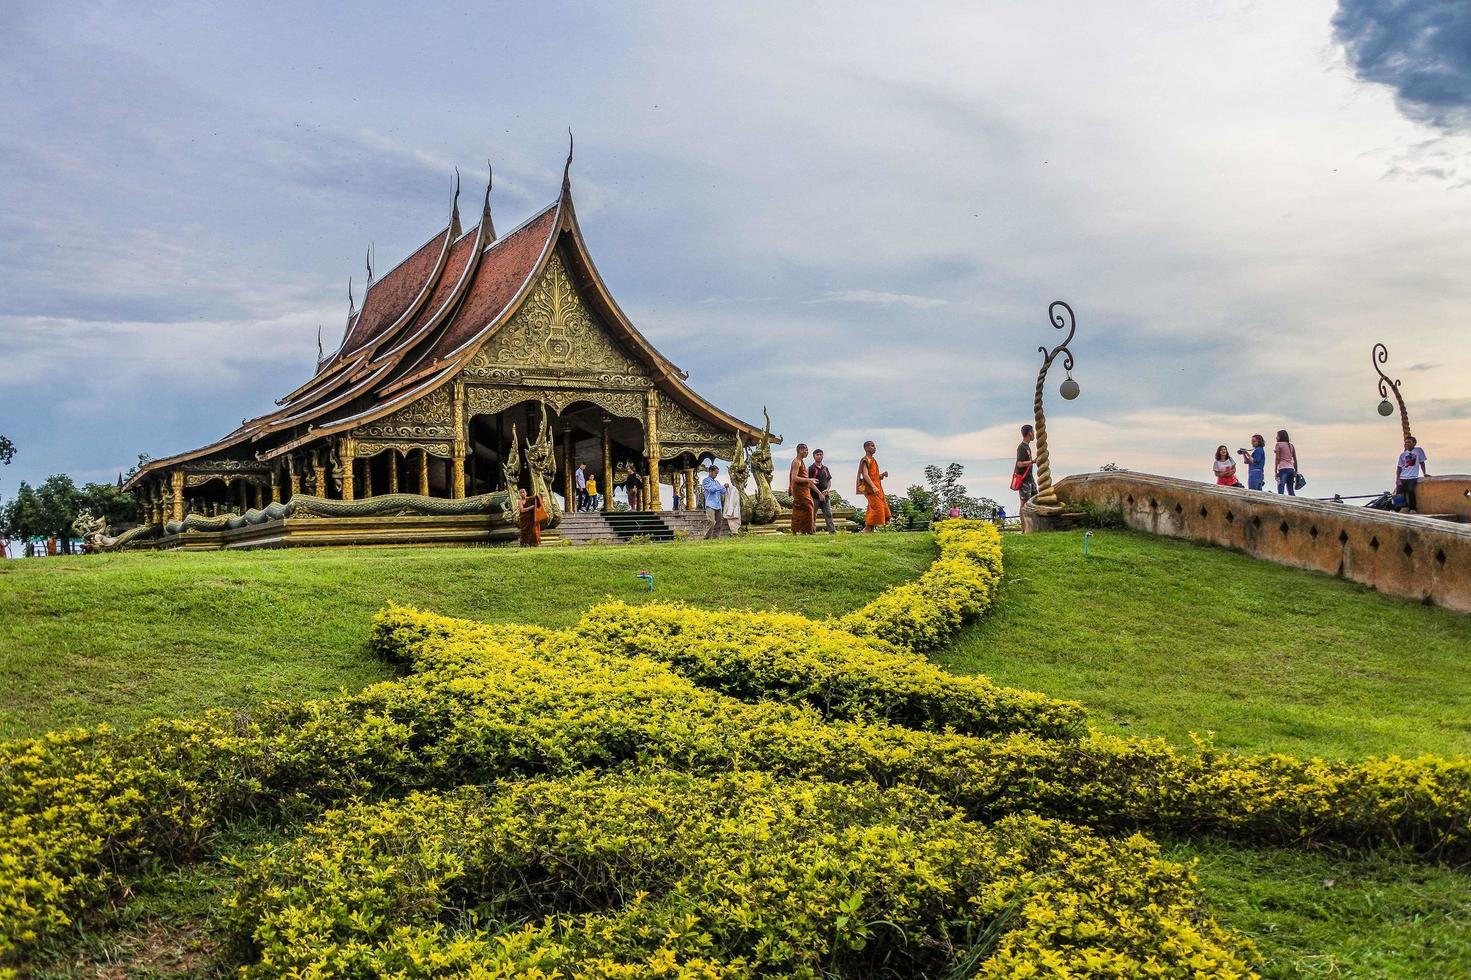 Thailand 2015 - Wat Phu Prao Tempel in Ubon Ratchathani, Thailand foto